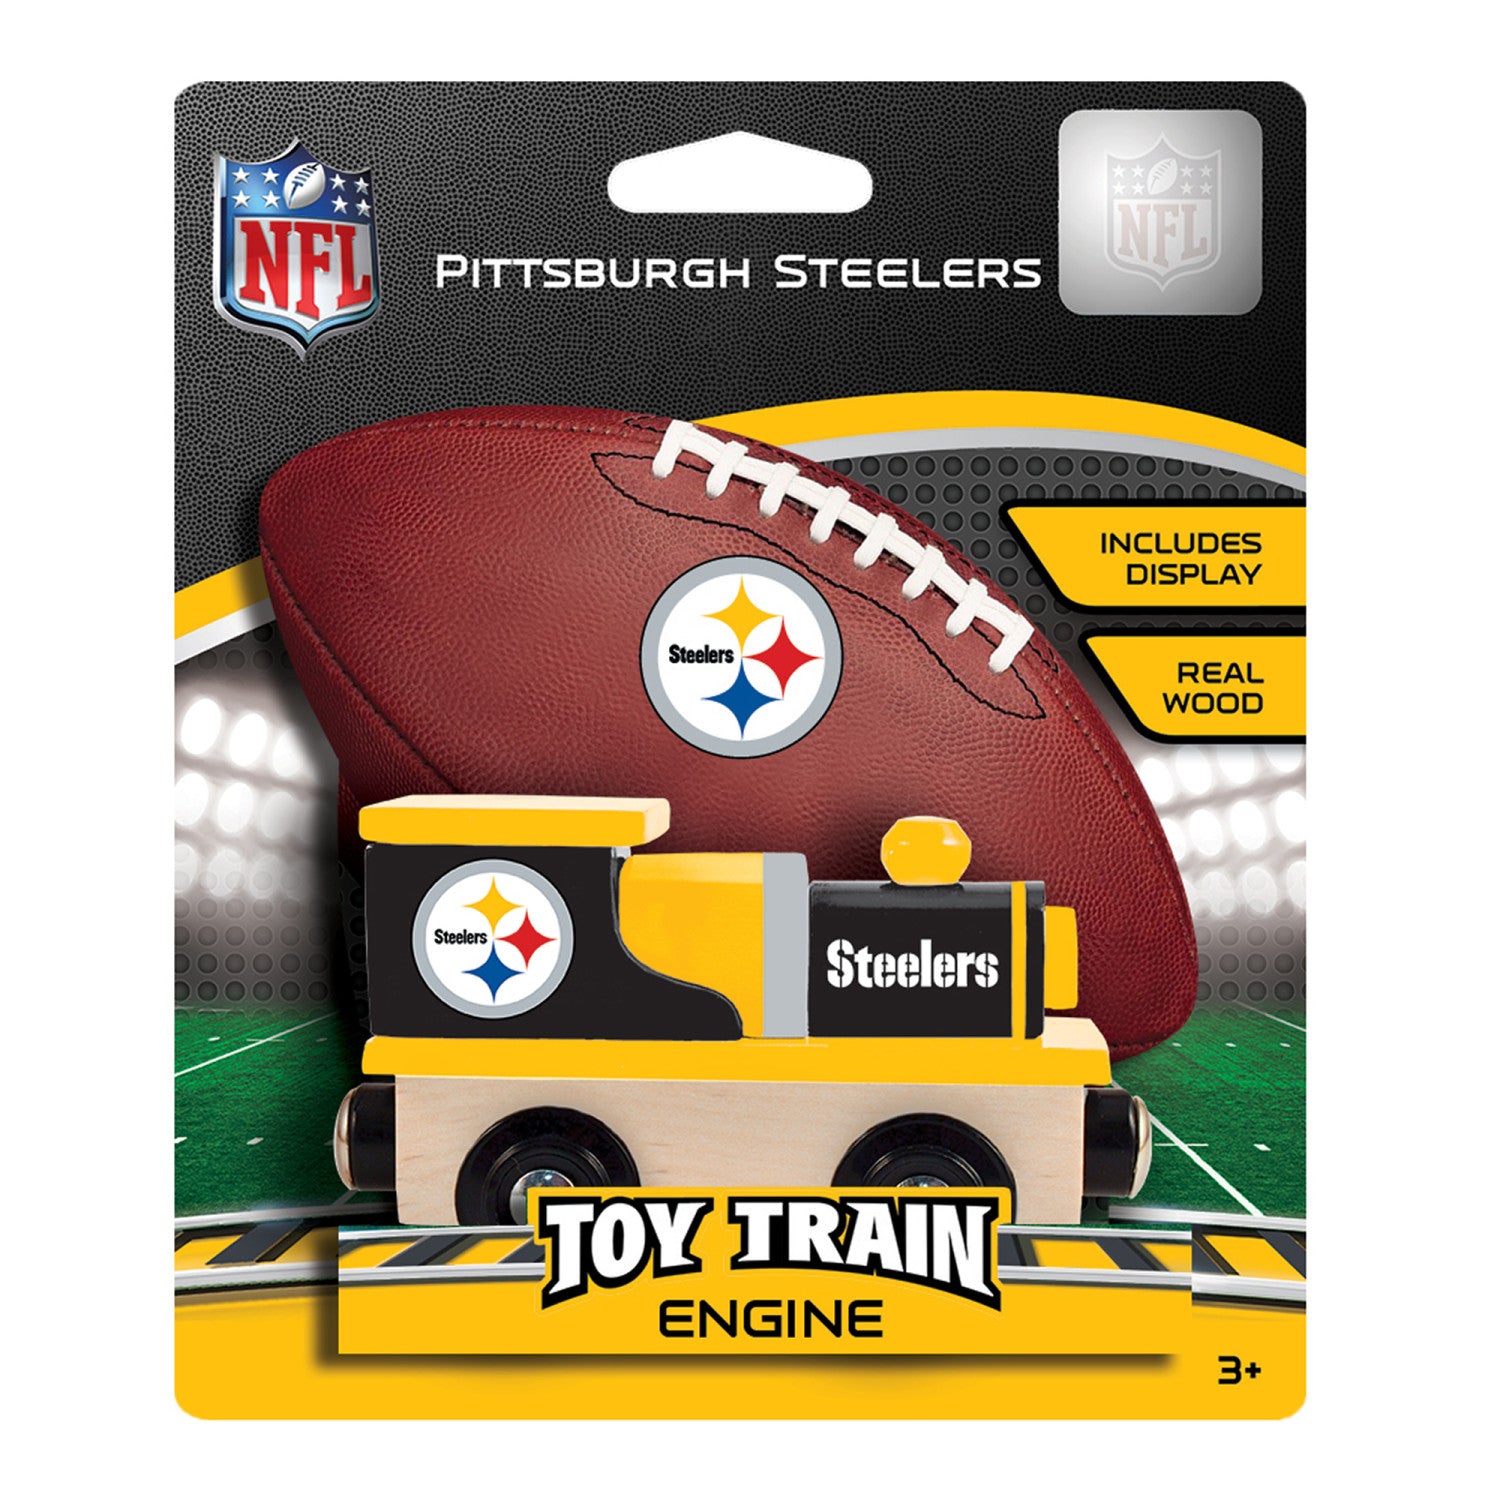 Pittsburgh Steelers NFL Wood Train Engine